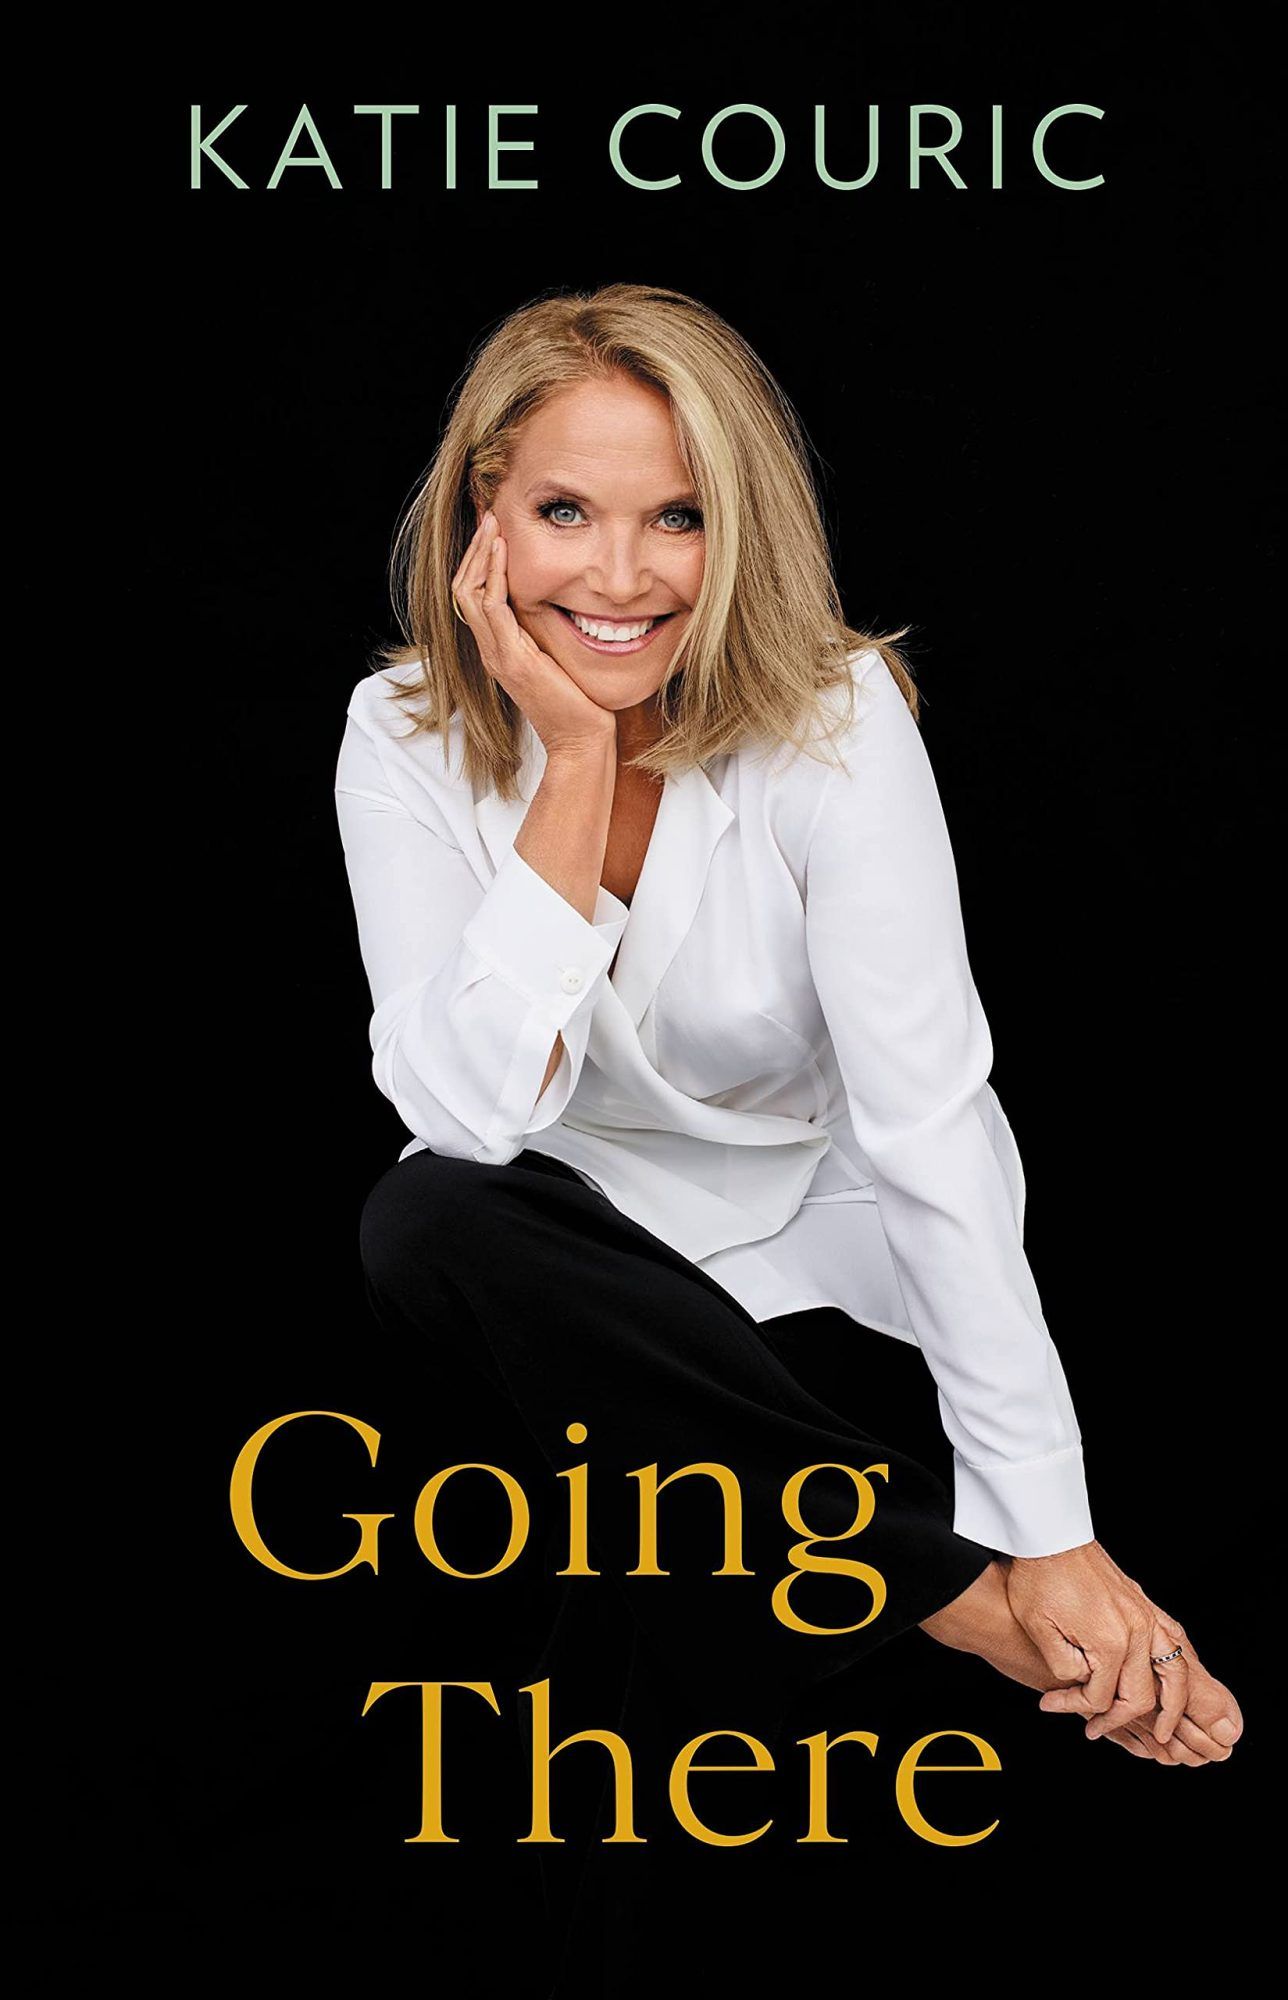 Katie Couric'in Going There kitabının kapağı